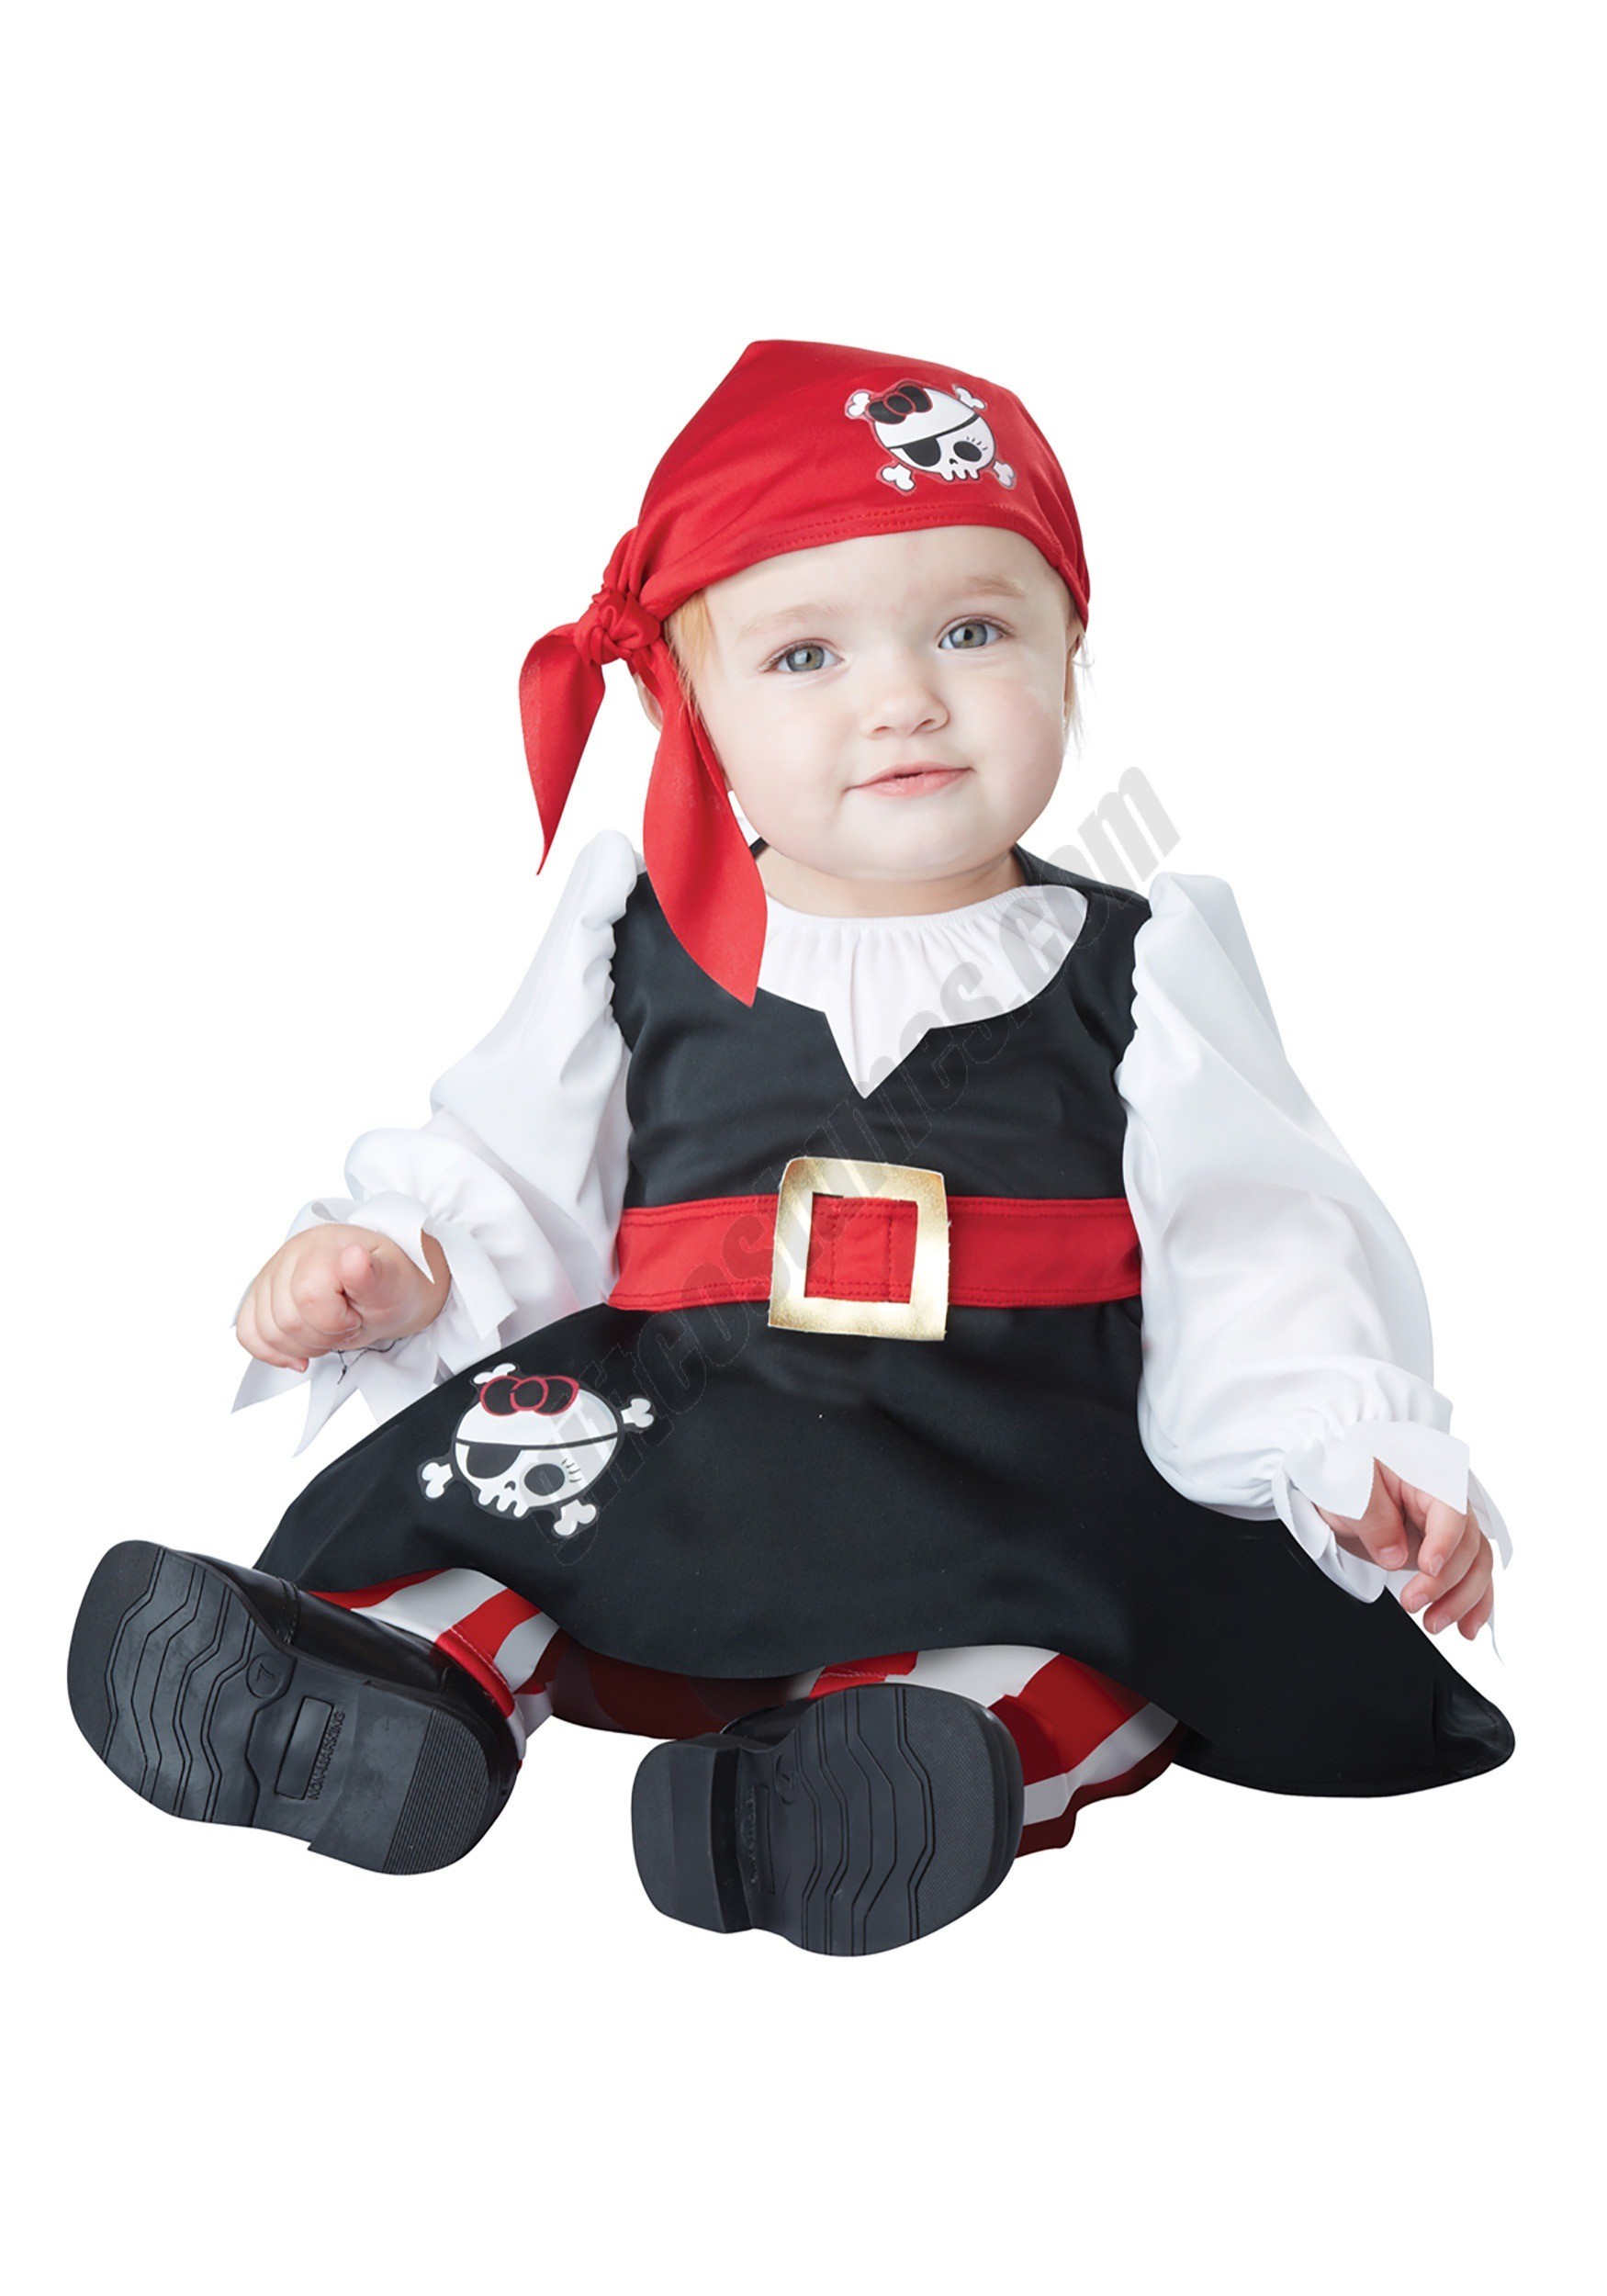 Petite Pirate Infant Costume Promotions - Petite Pirate Infant Costume Promotions